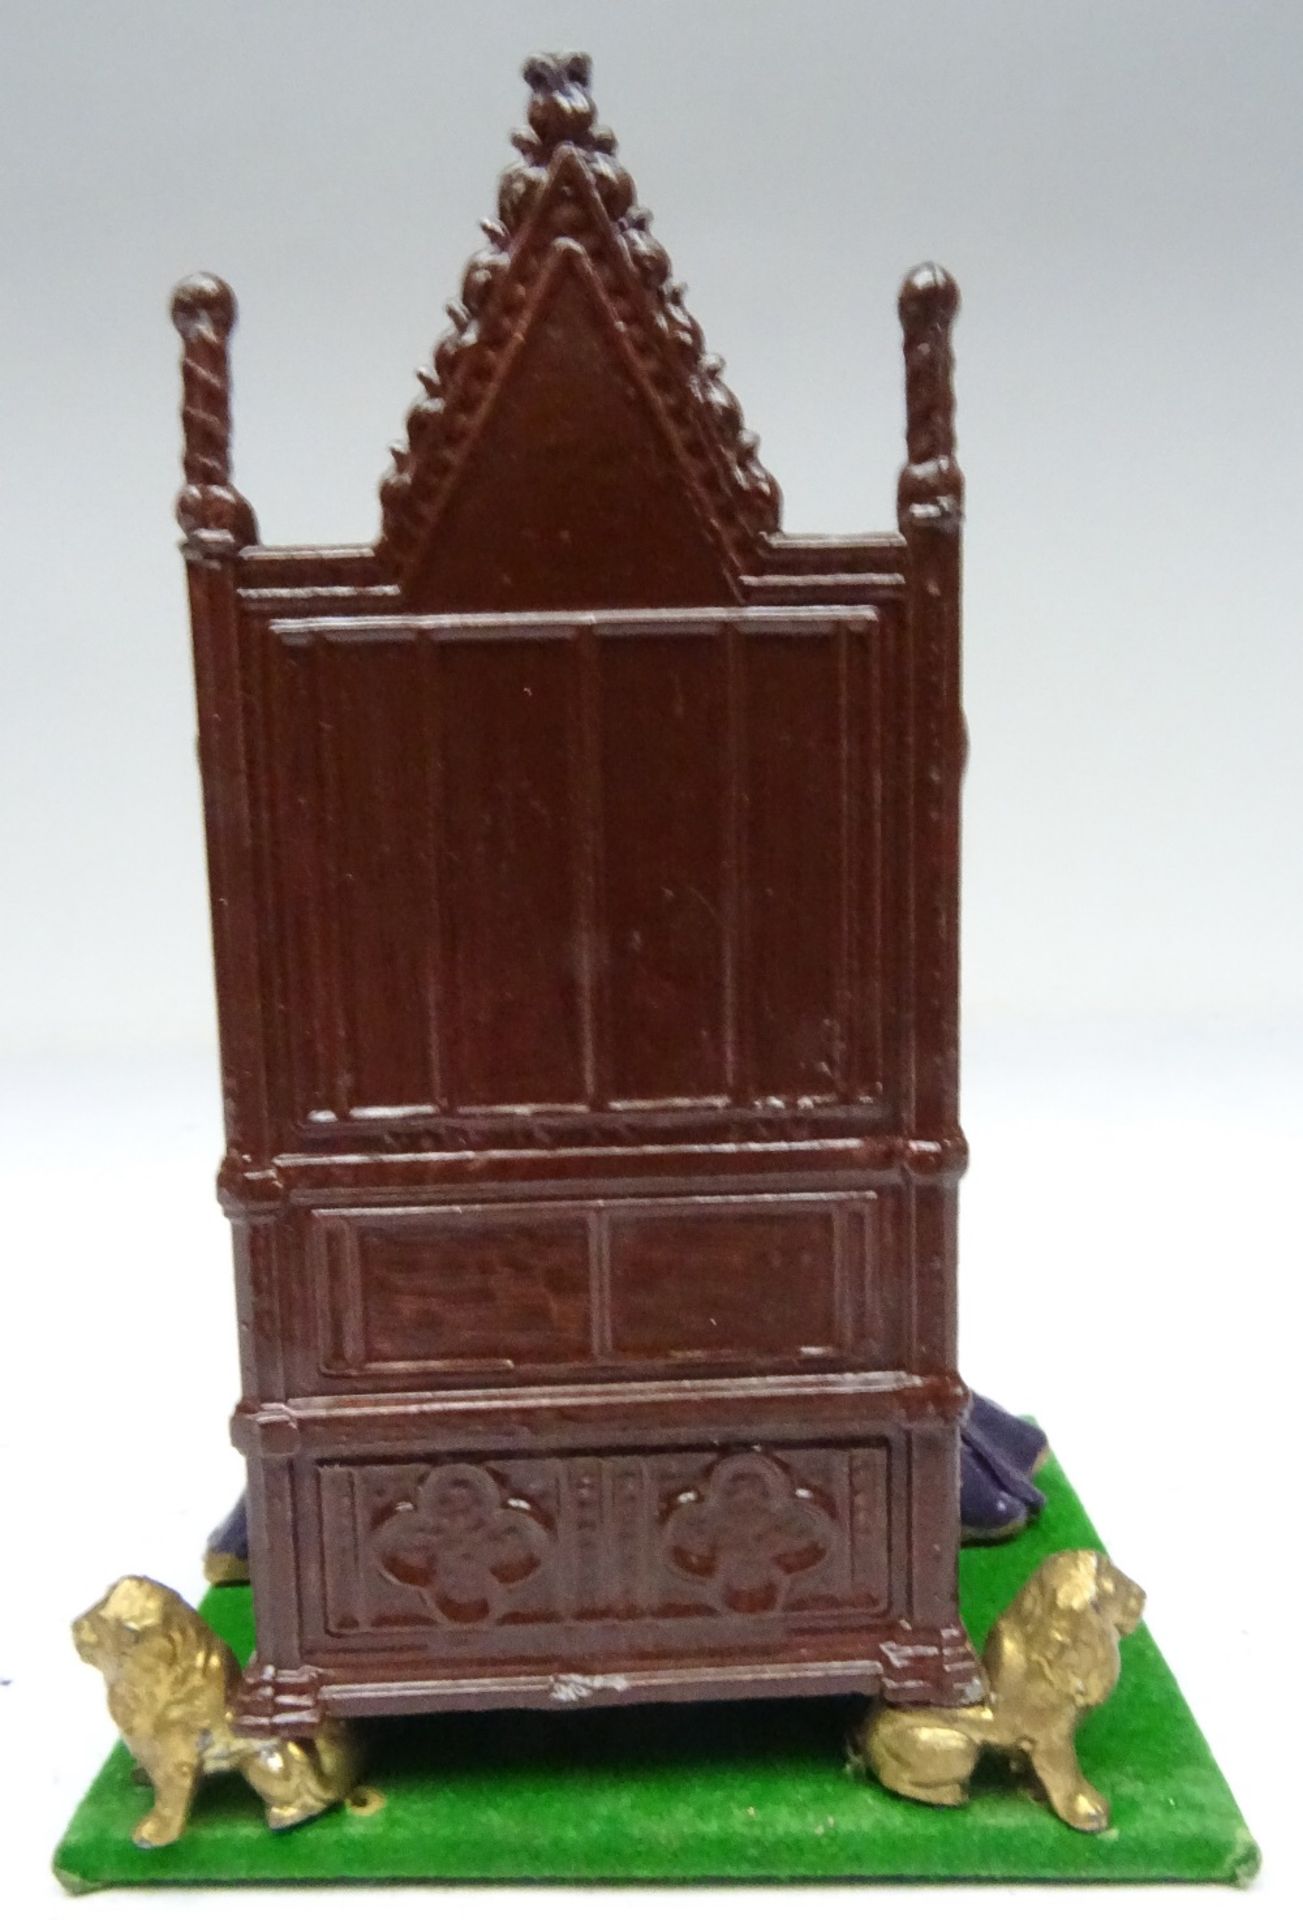 Johillco RARE souvenir figure of King George VI on Coronation Chair - Image 6 of 6